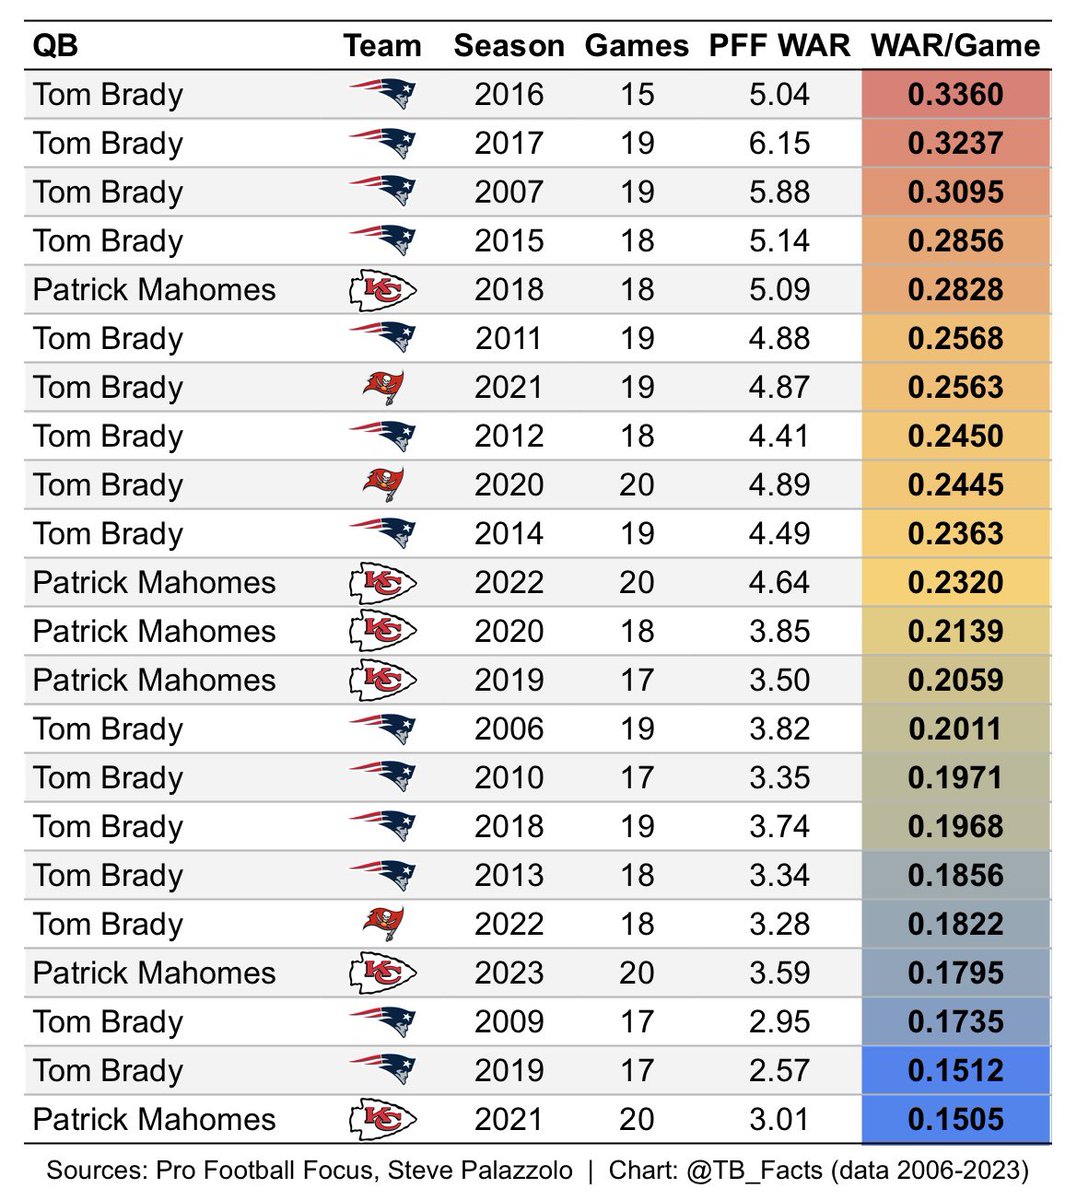 Brady and Mahomes seasons by PFF WAR per game